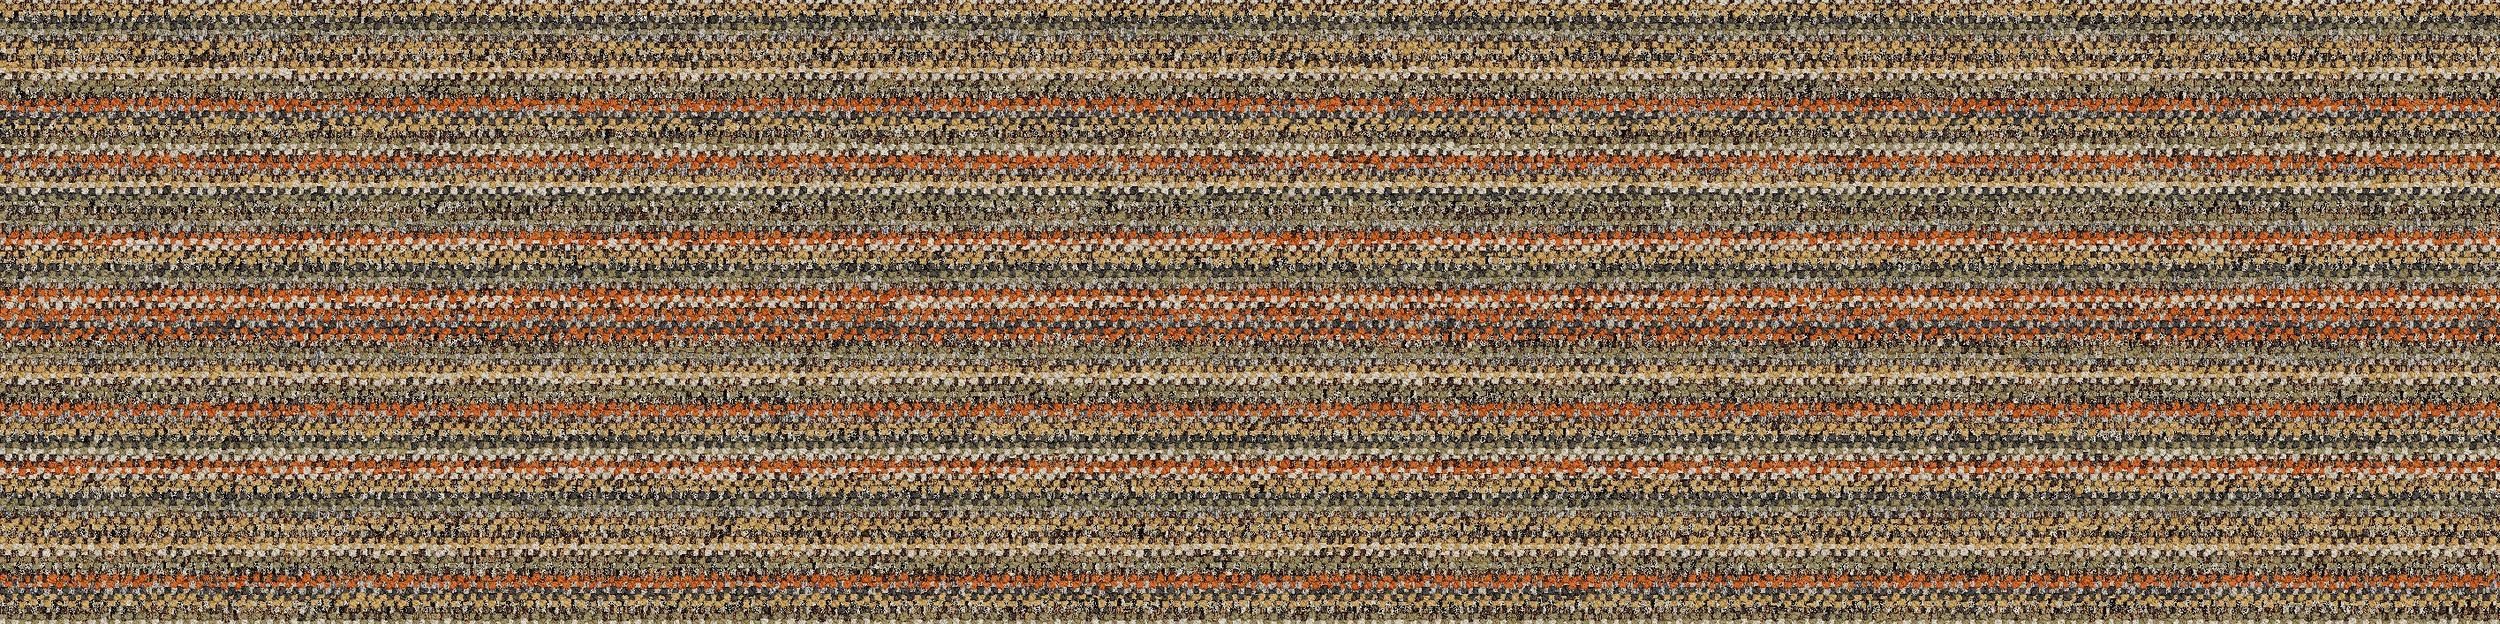 WW865 Carpet Tile In Autumn Warp número de imagen 2